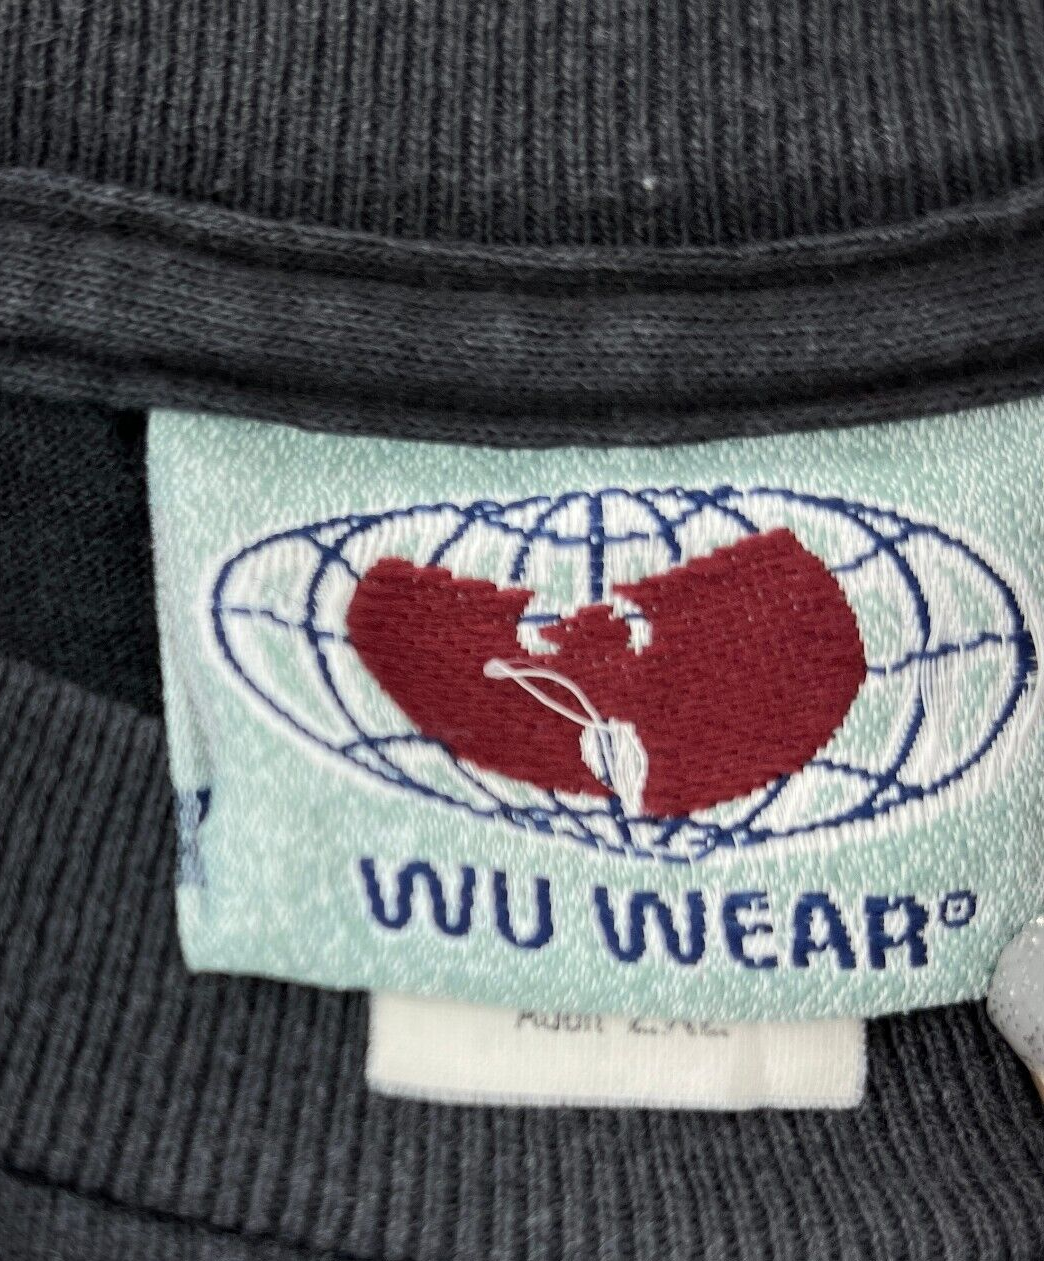 Vintage Wu Wear Wu-Tang Killa Bees 36 Chambers Faded Black T-Shirt Size 2XL